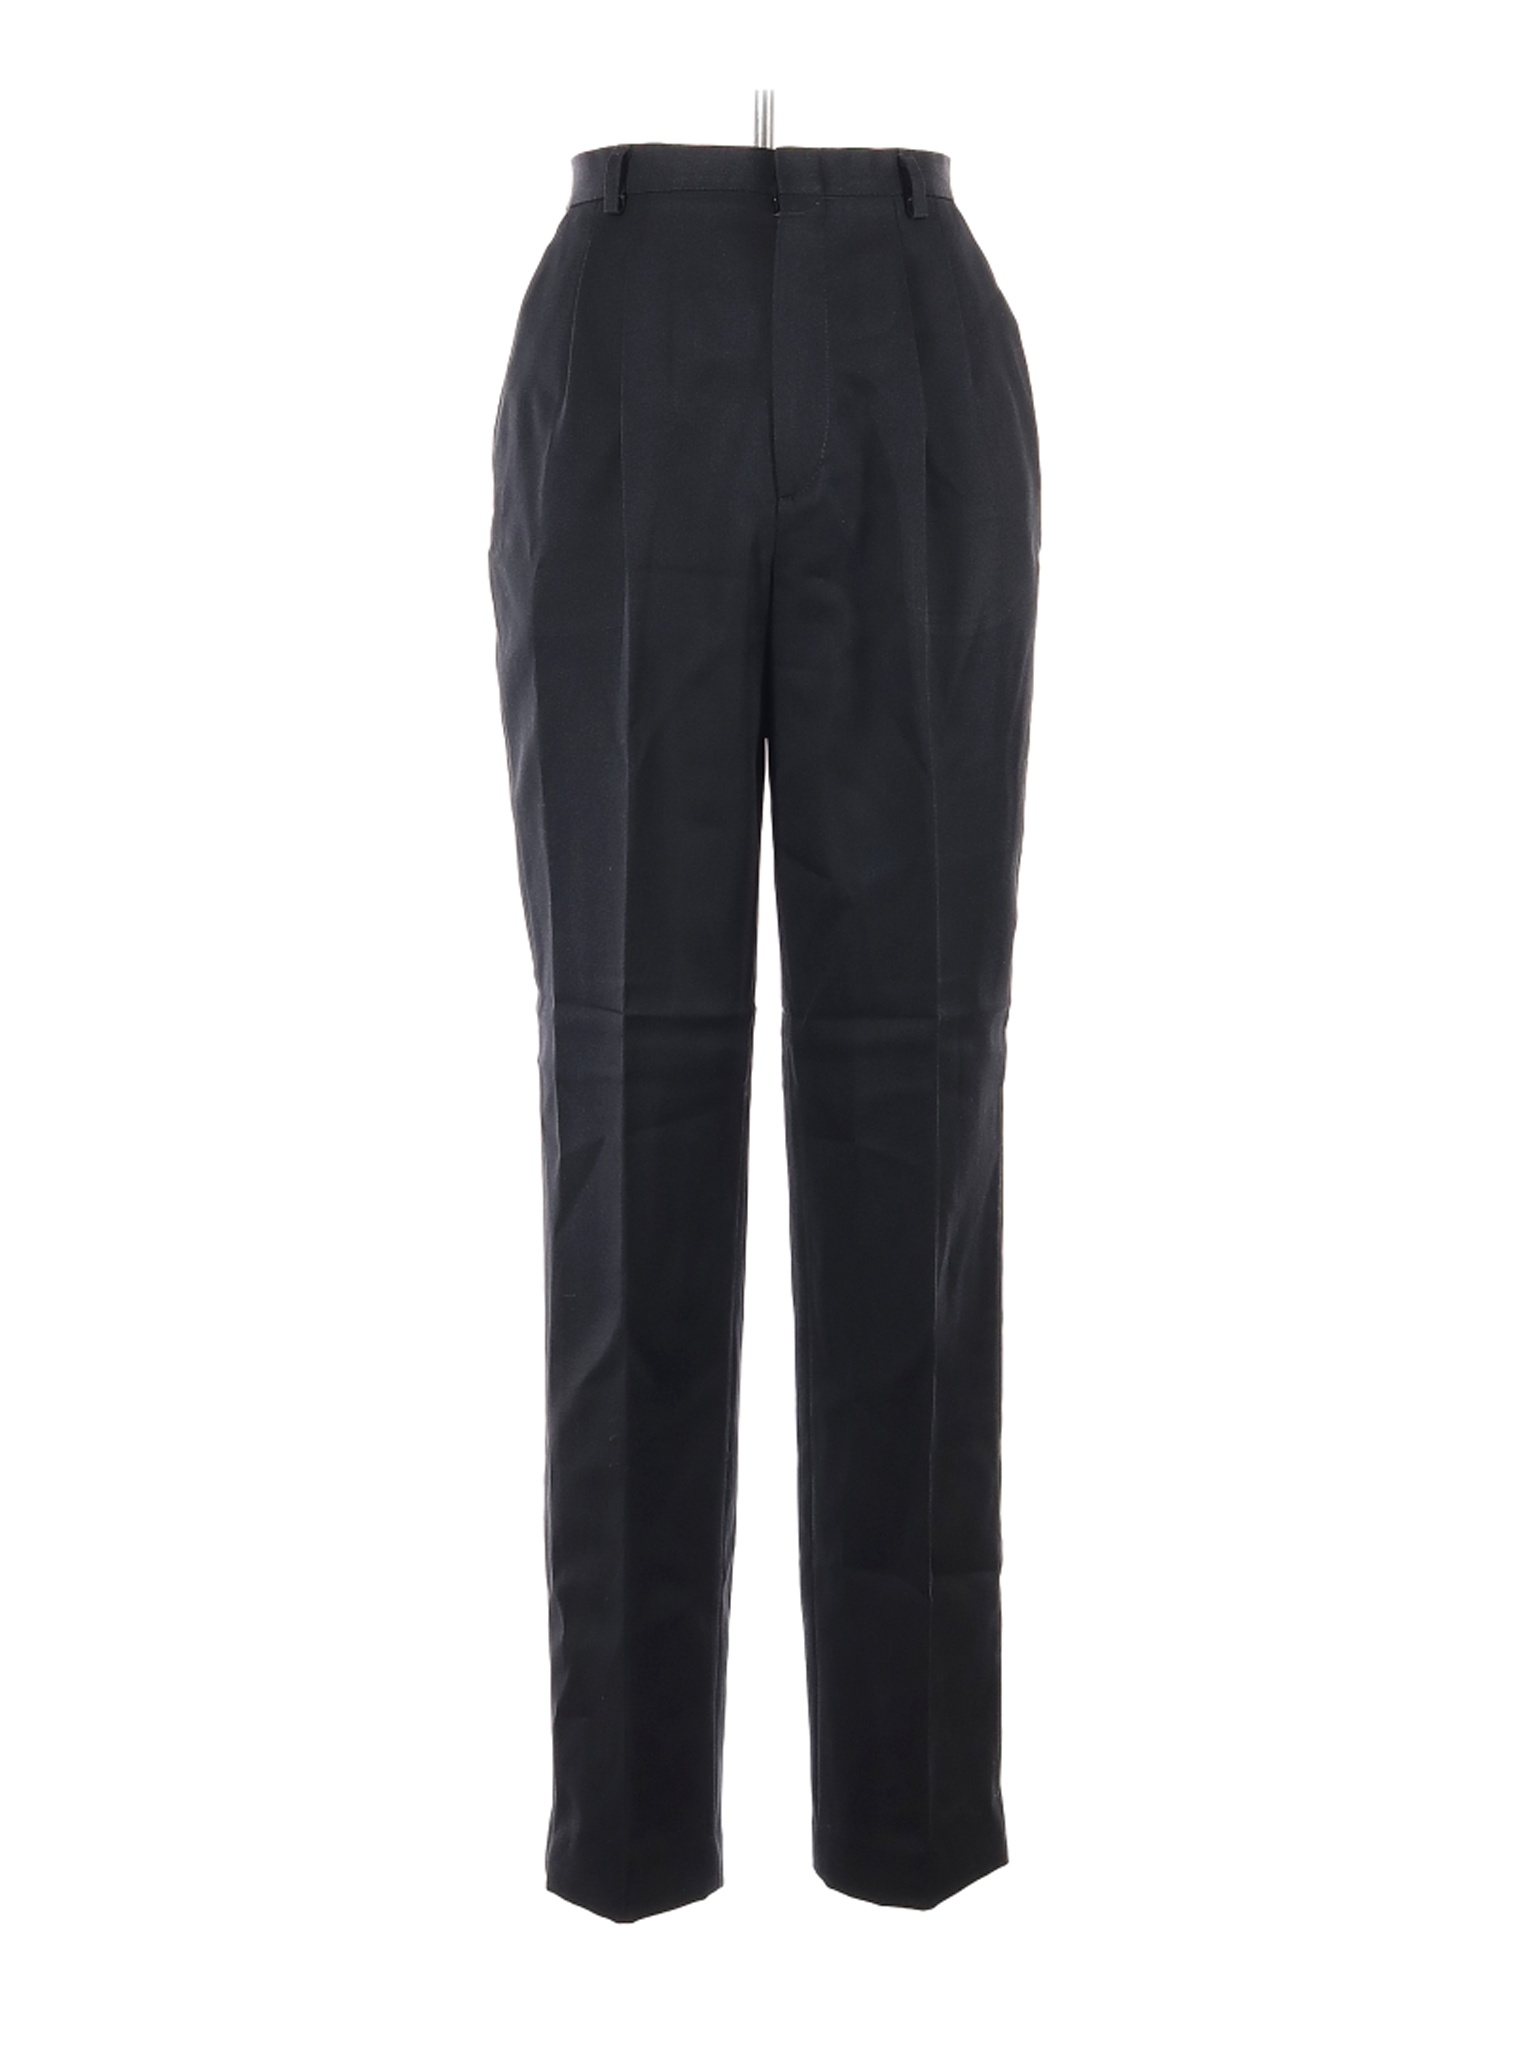 Haggar Women Black Dress Pants 8 | eBay